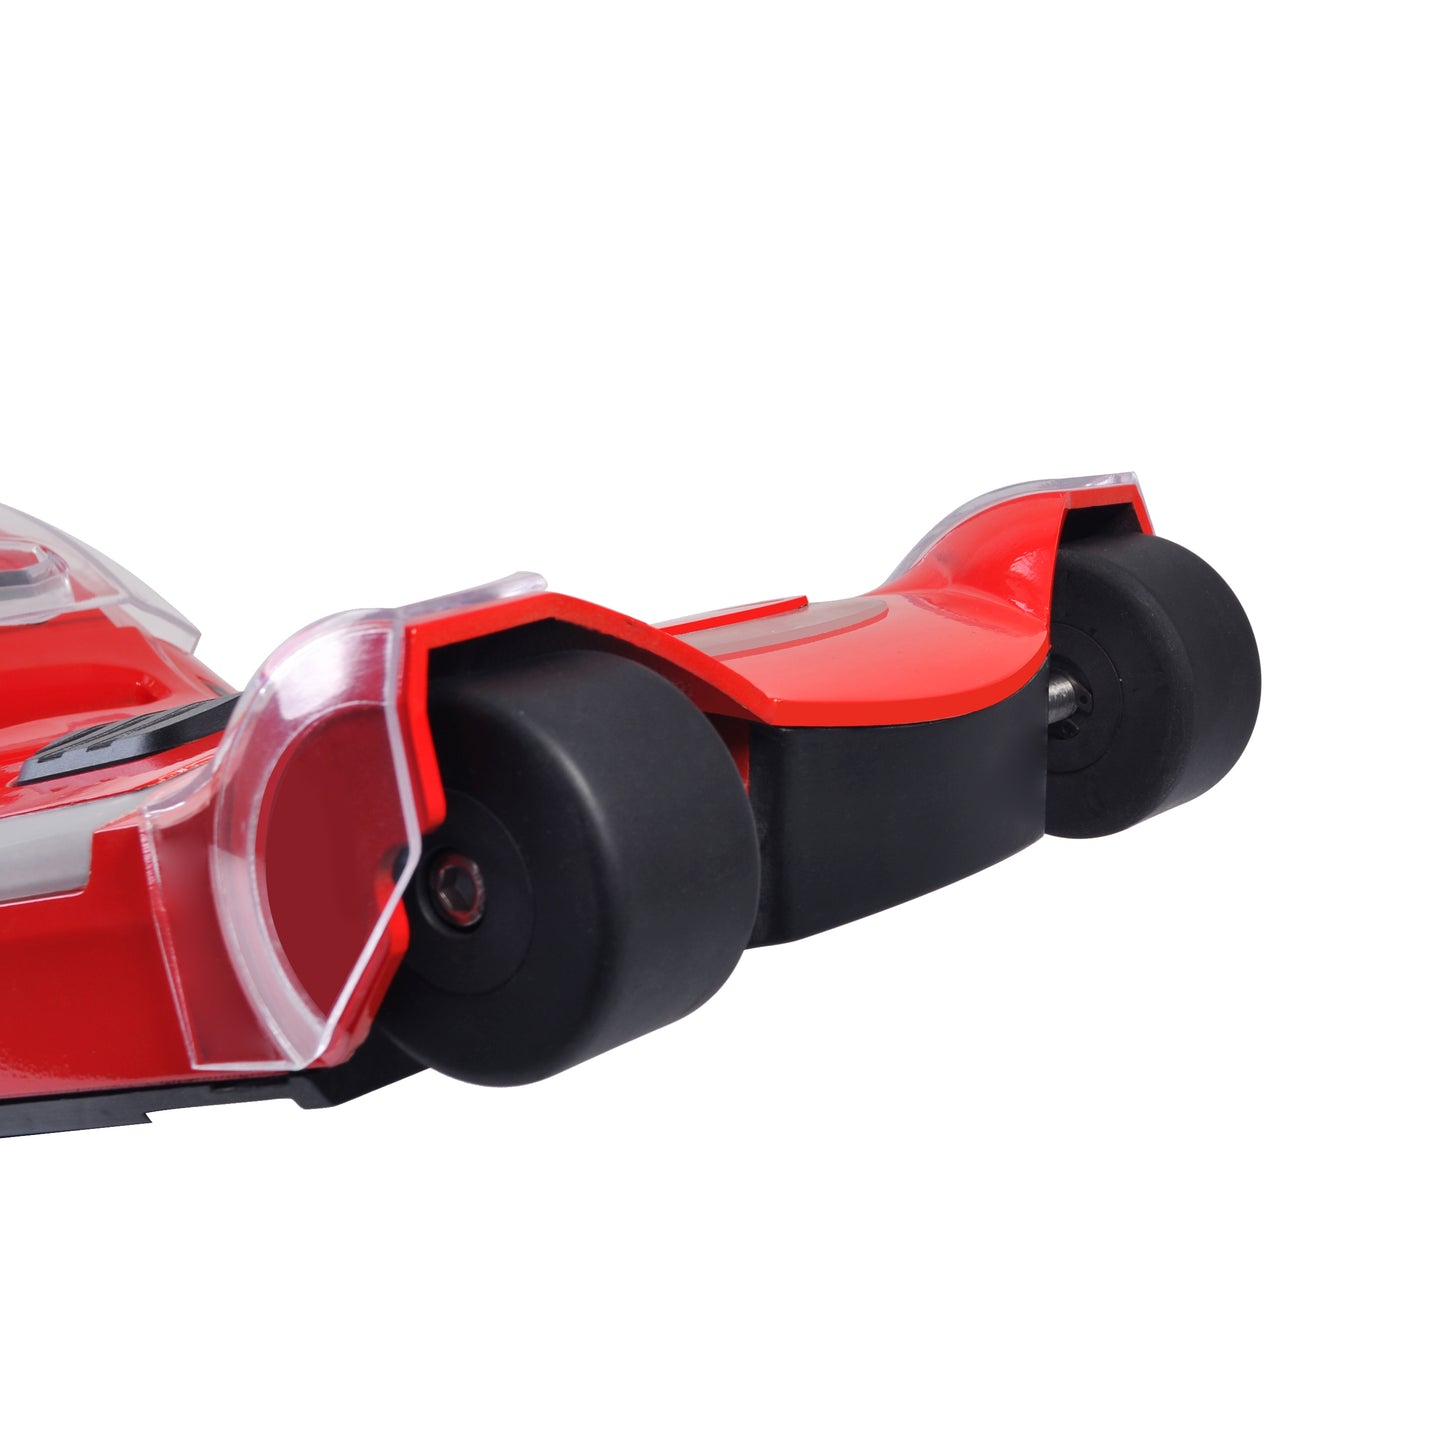 Surfwheel -TR Self-Balancing Electric Skateboard w/ 8 mi Max Operating Range & 10 mph Max Speed